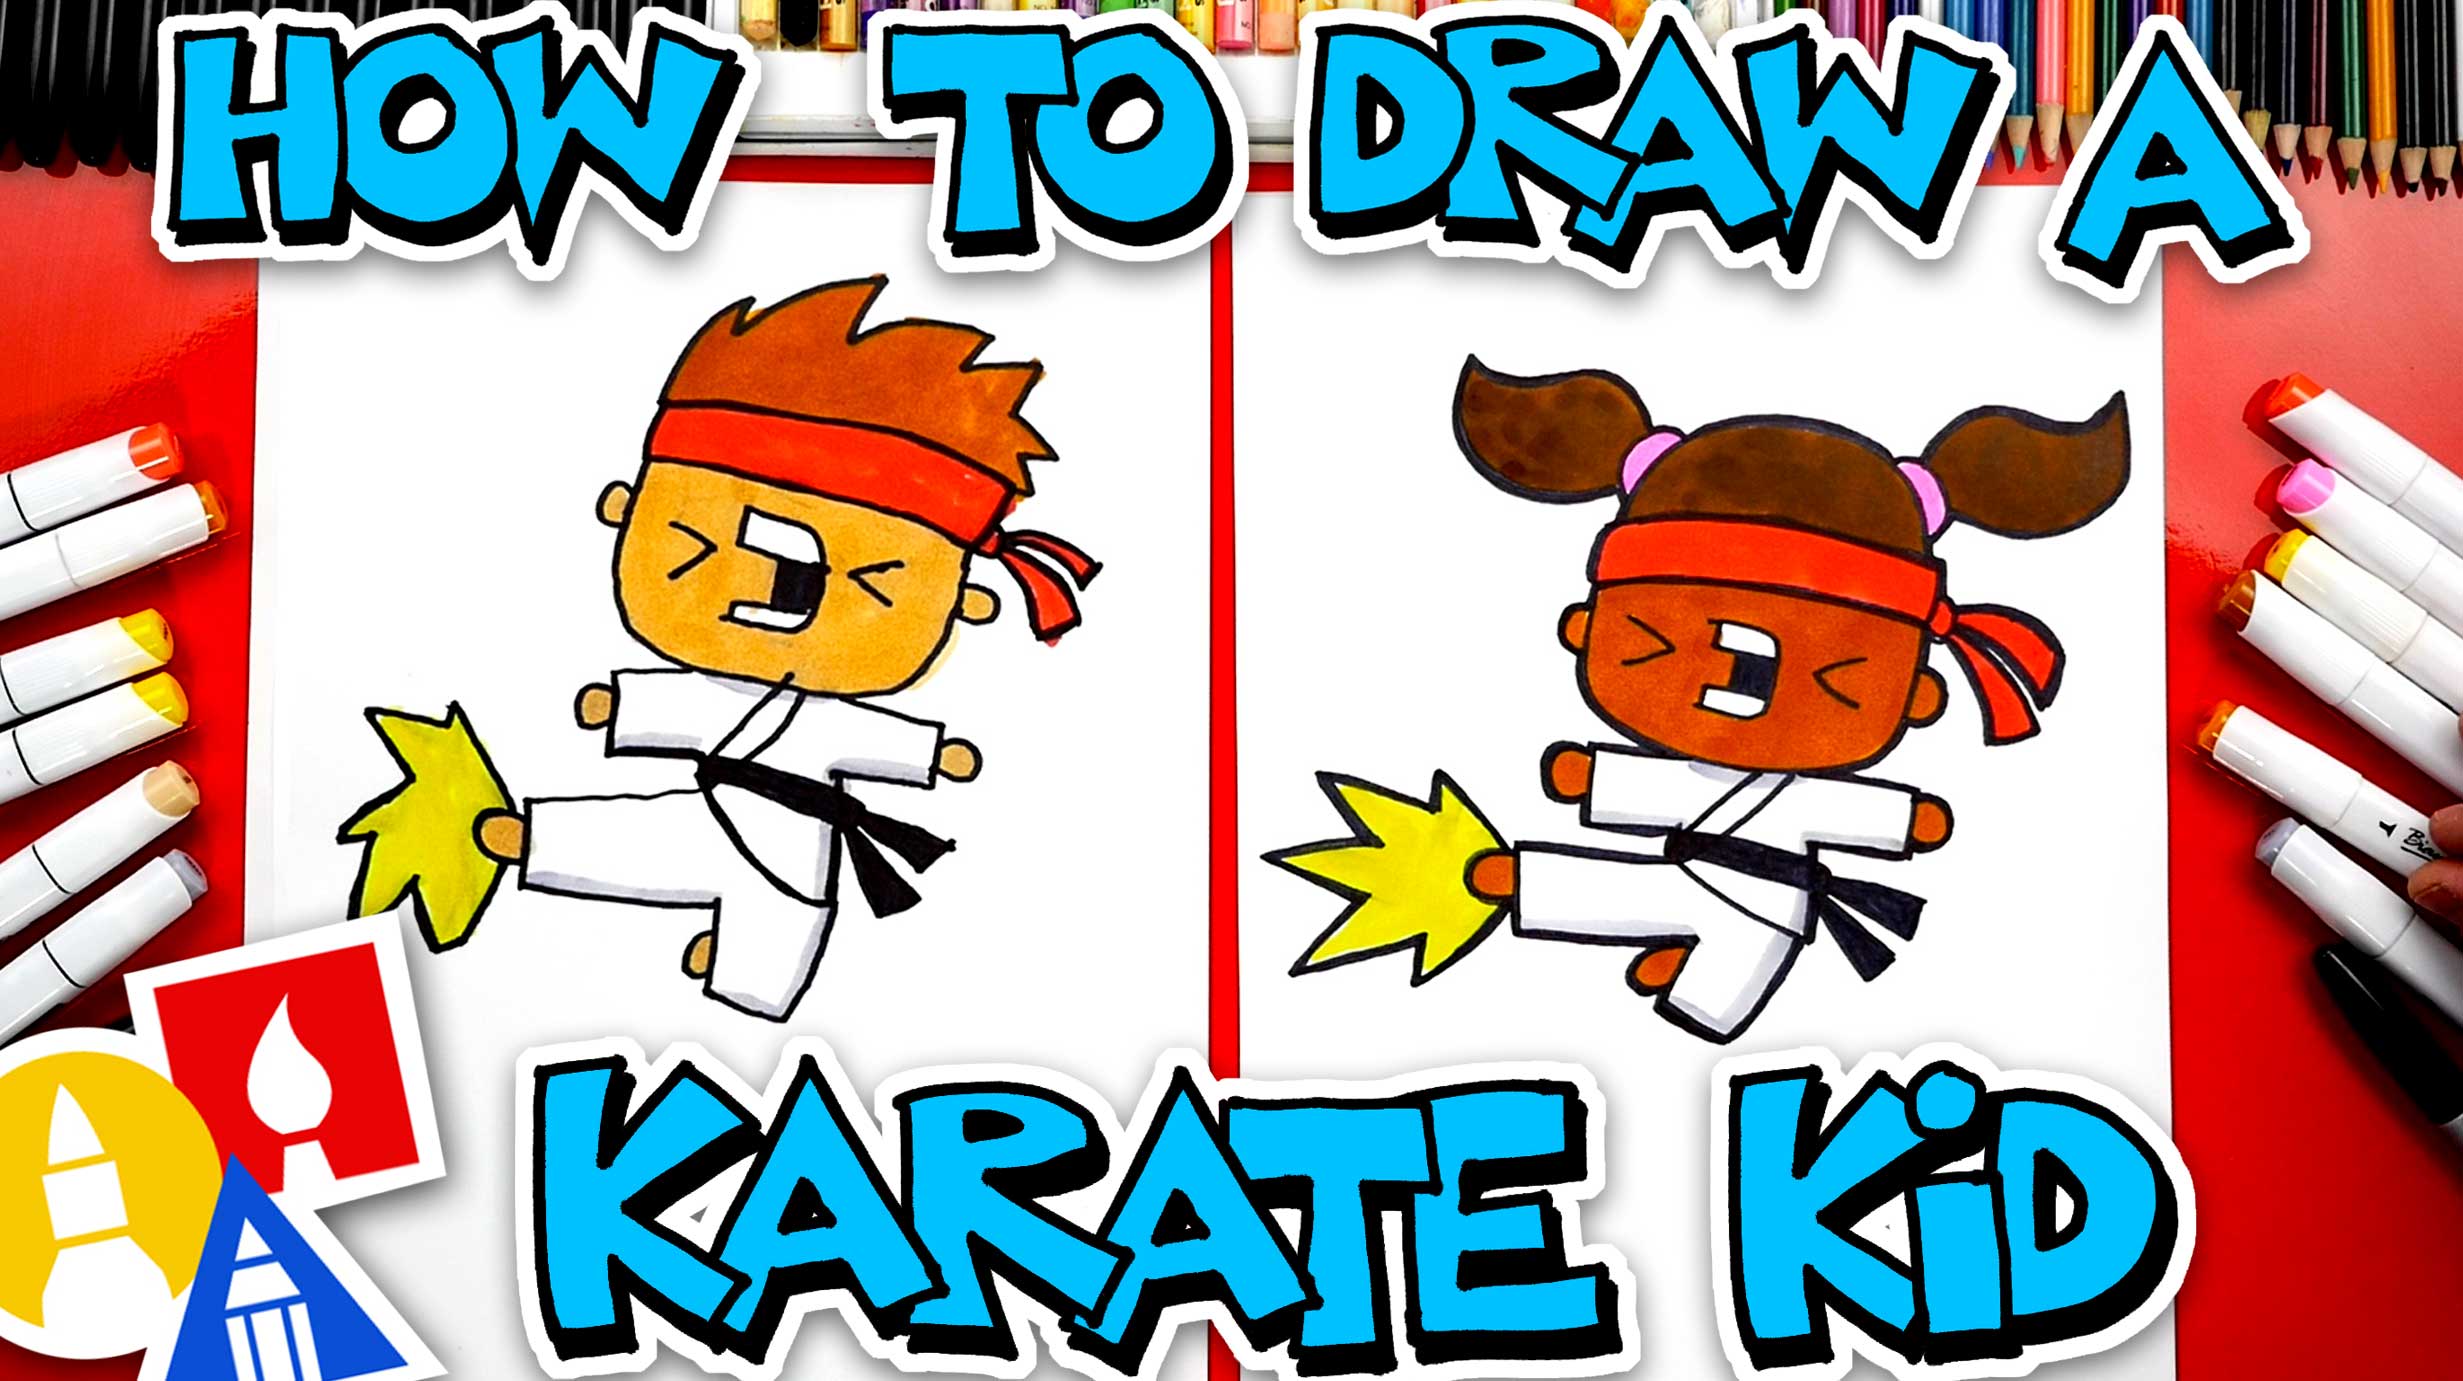 How To Draw A Karate Kid - Art For Kids Hub